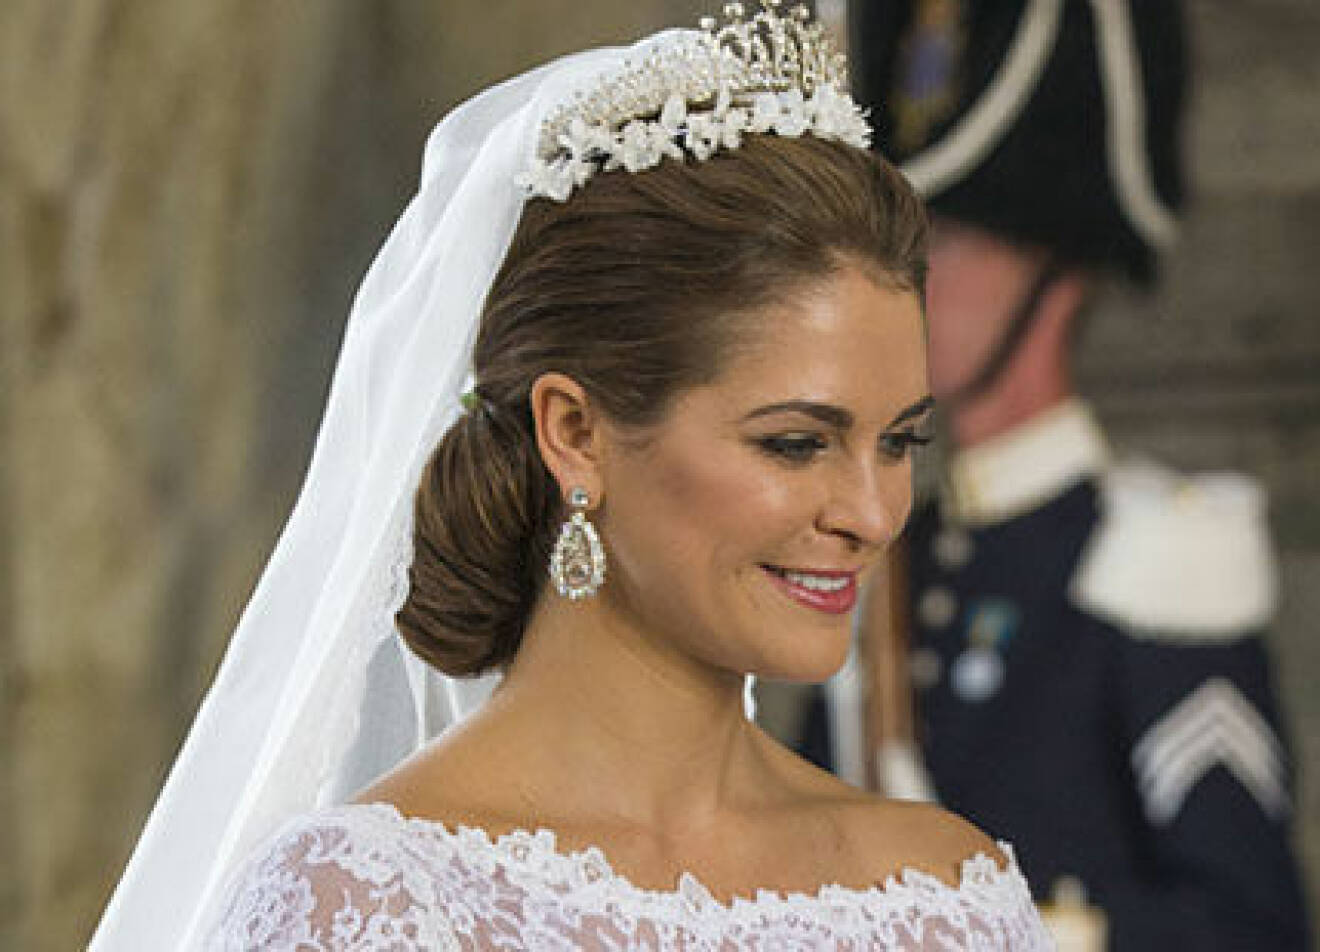 Prinsessan Madeleine gnistrade i alla smycken under bröllopet